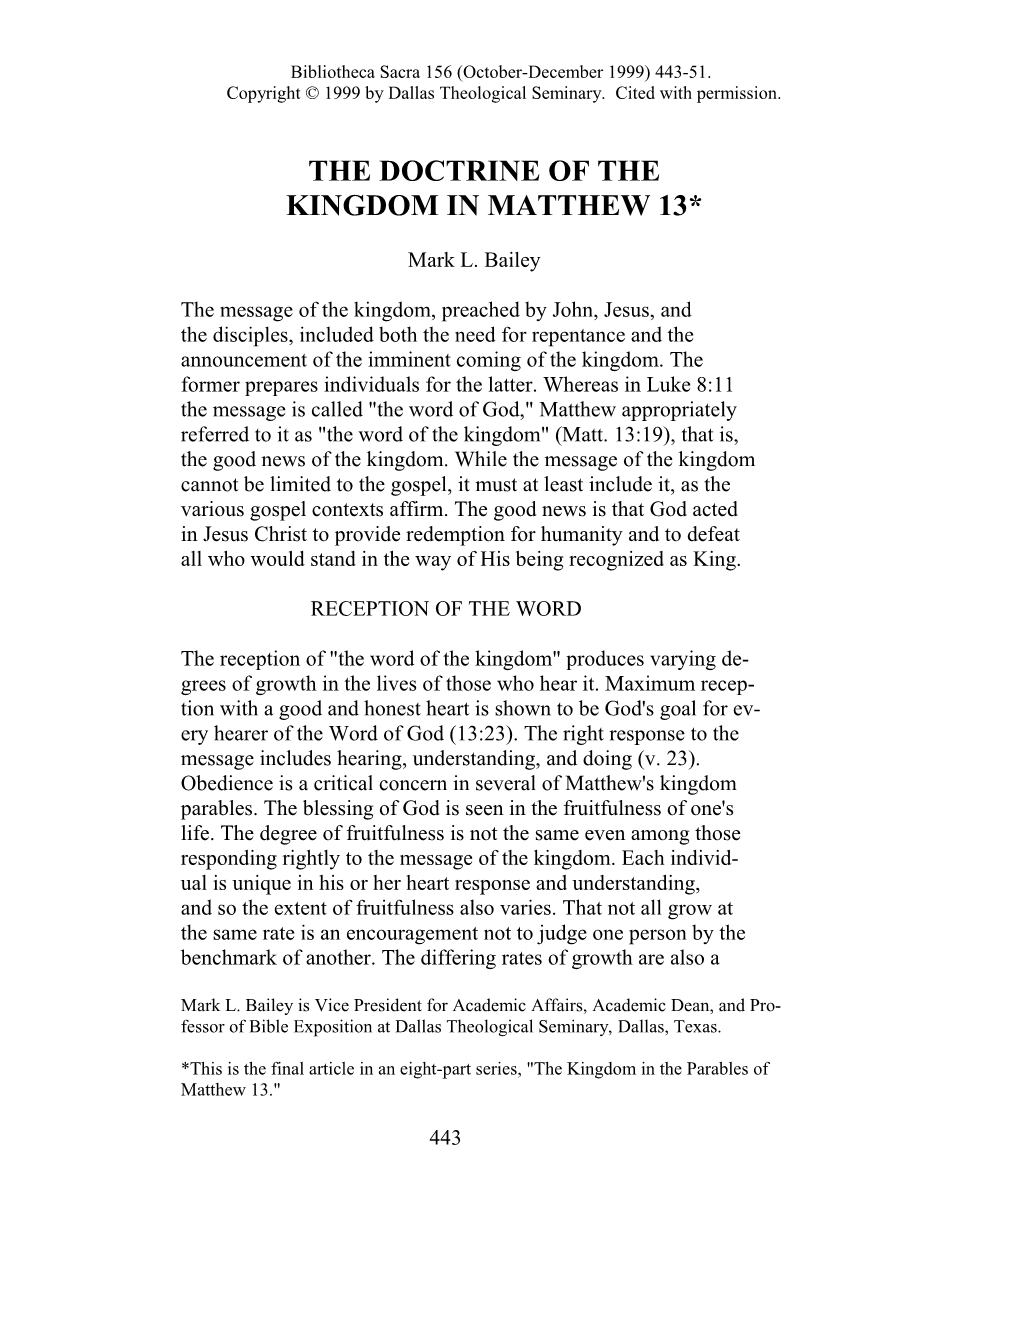 The Doctrine of the Kingdom in Matthew 13